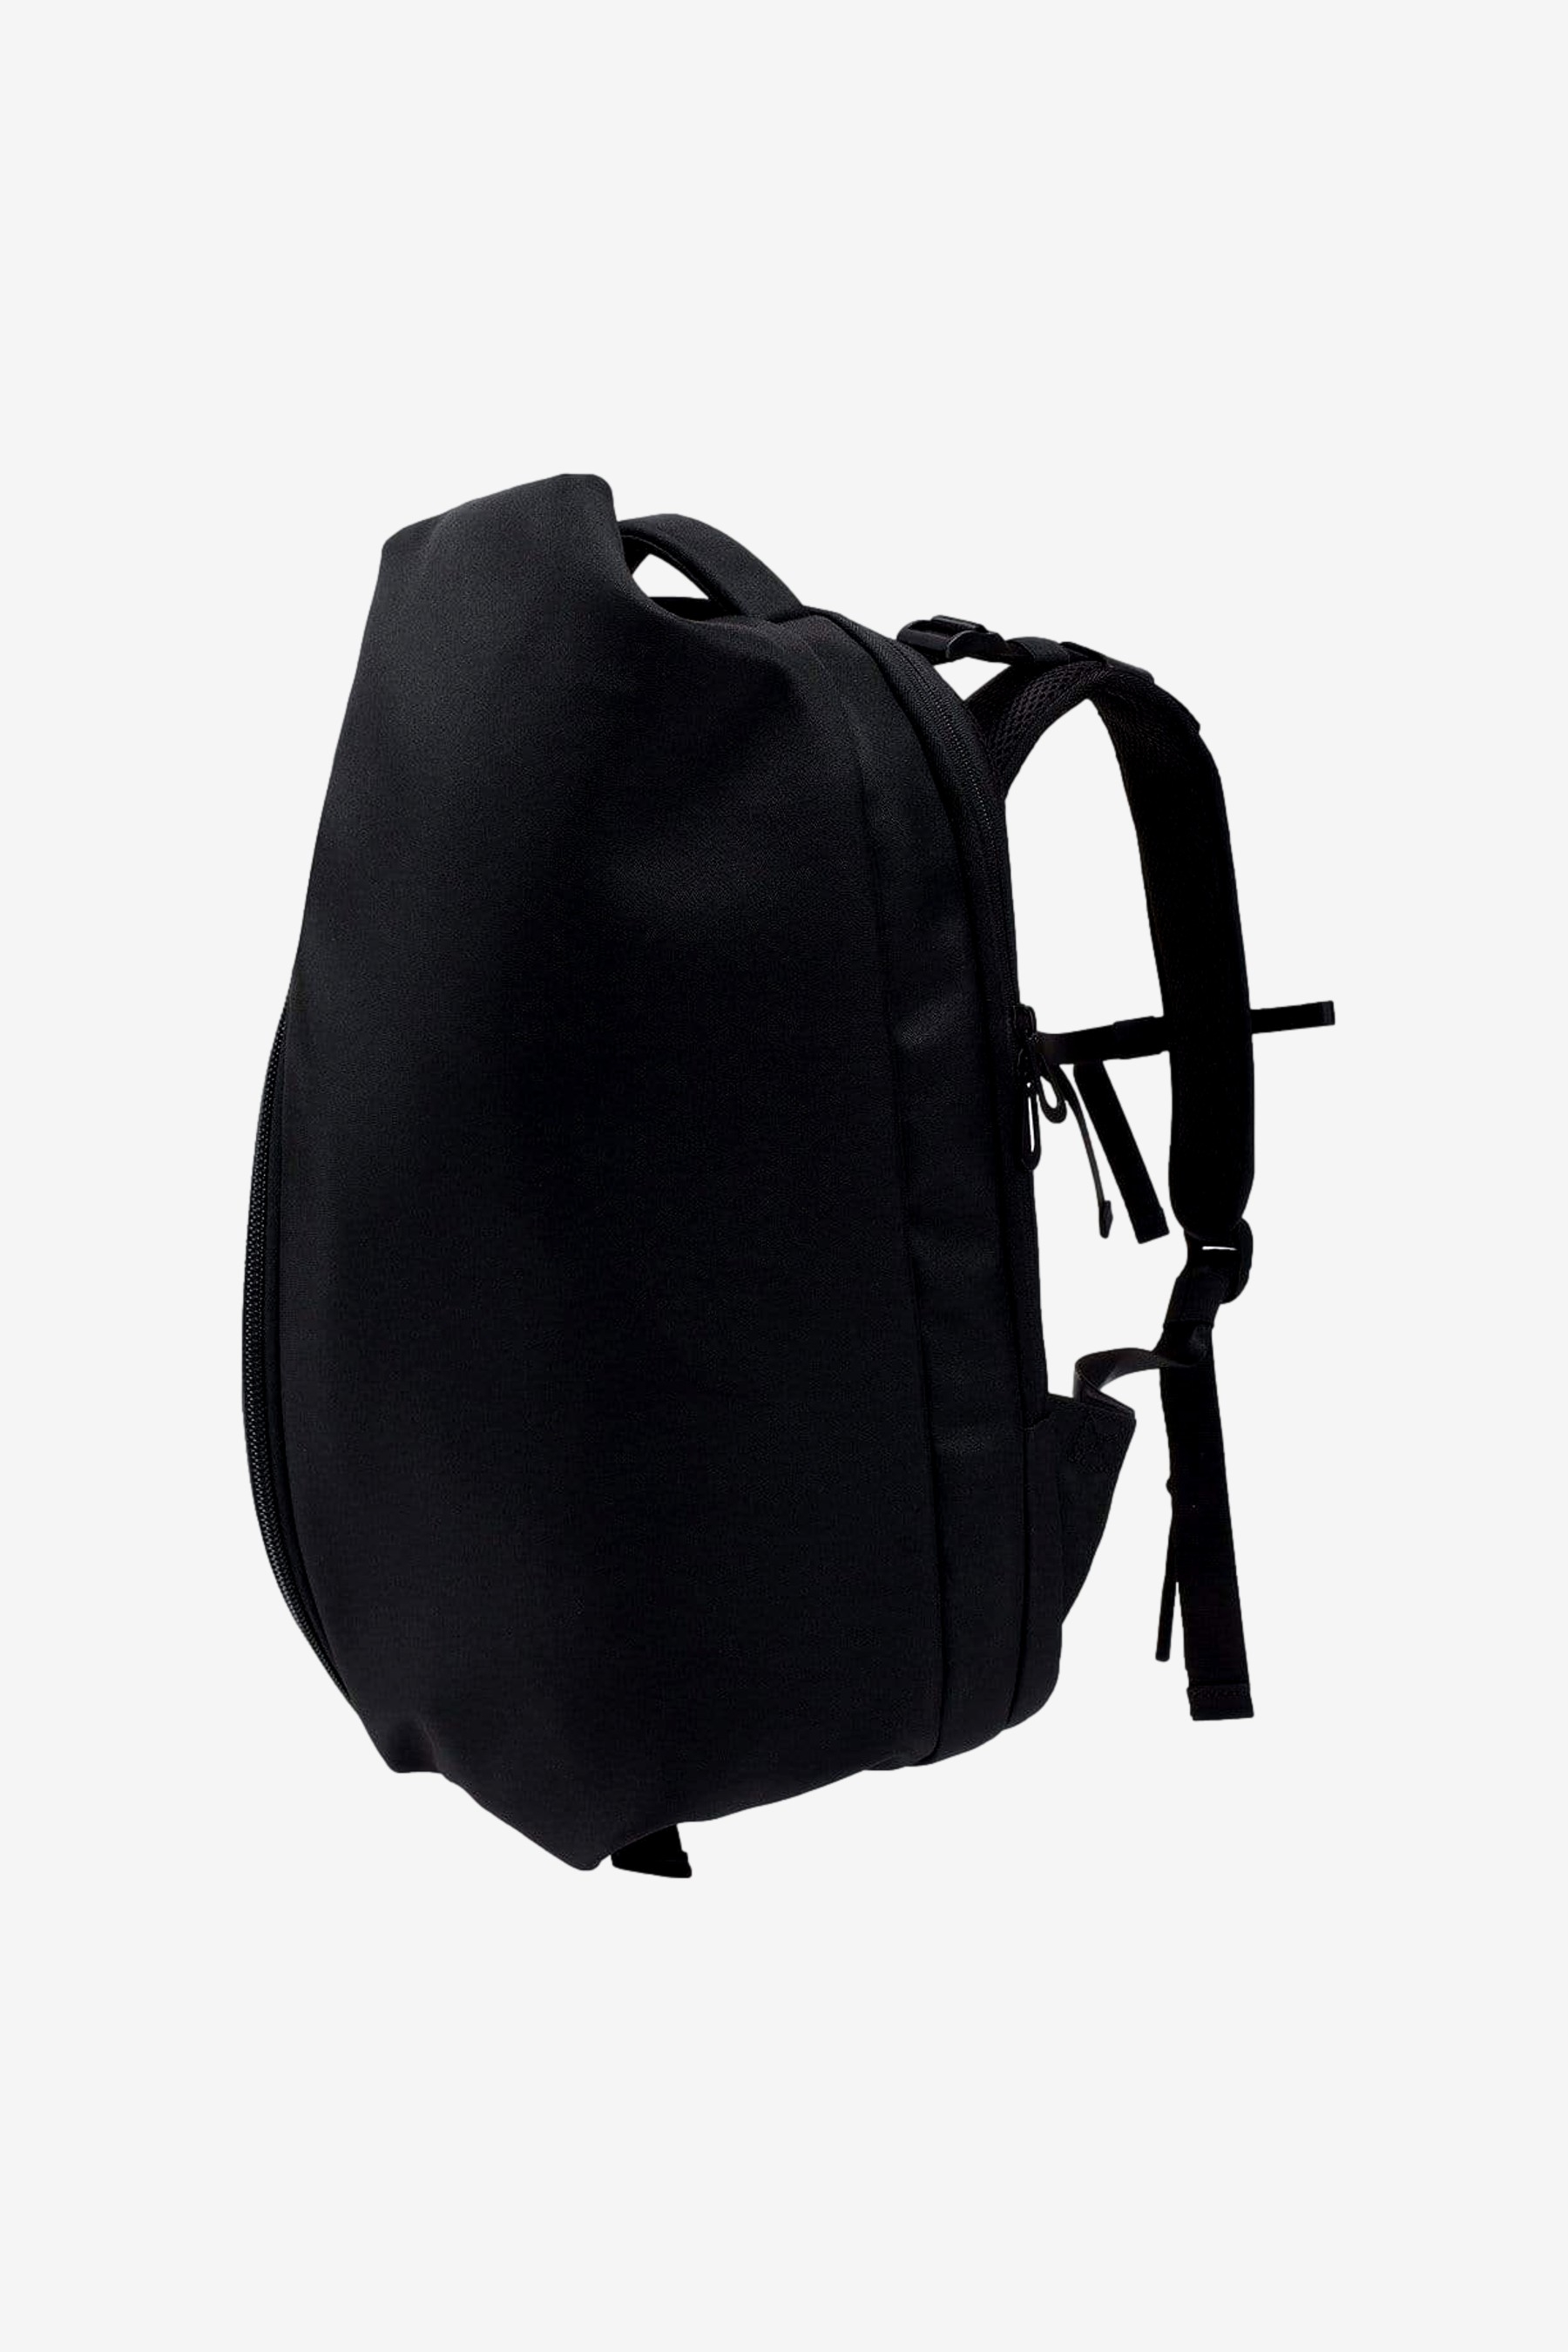 Isar Air Backpack Ecoyarn in Black - Cote&Ciel | Afura Store